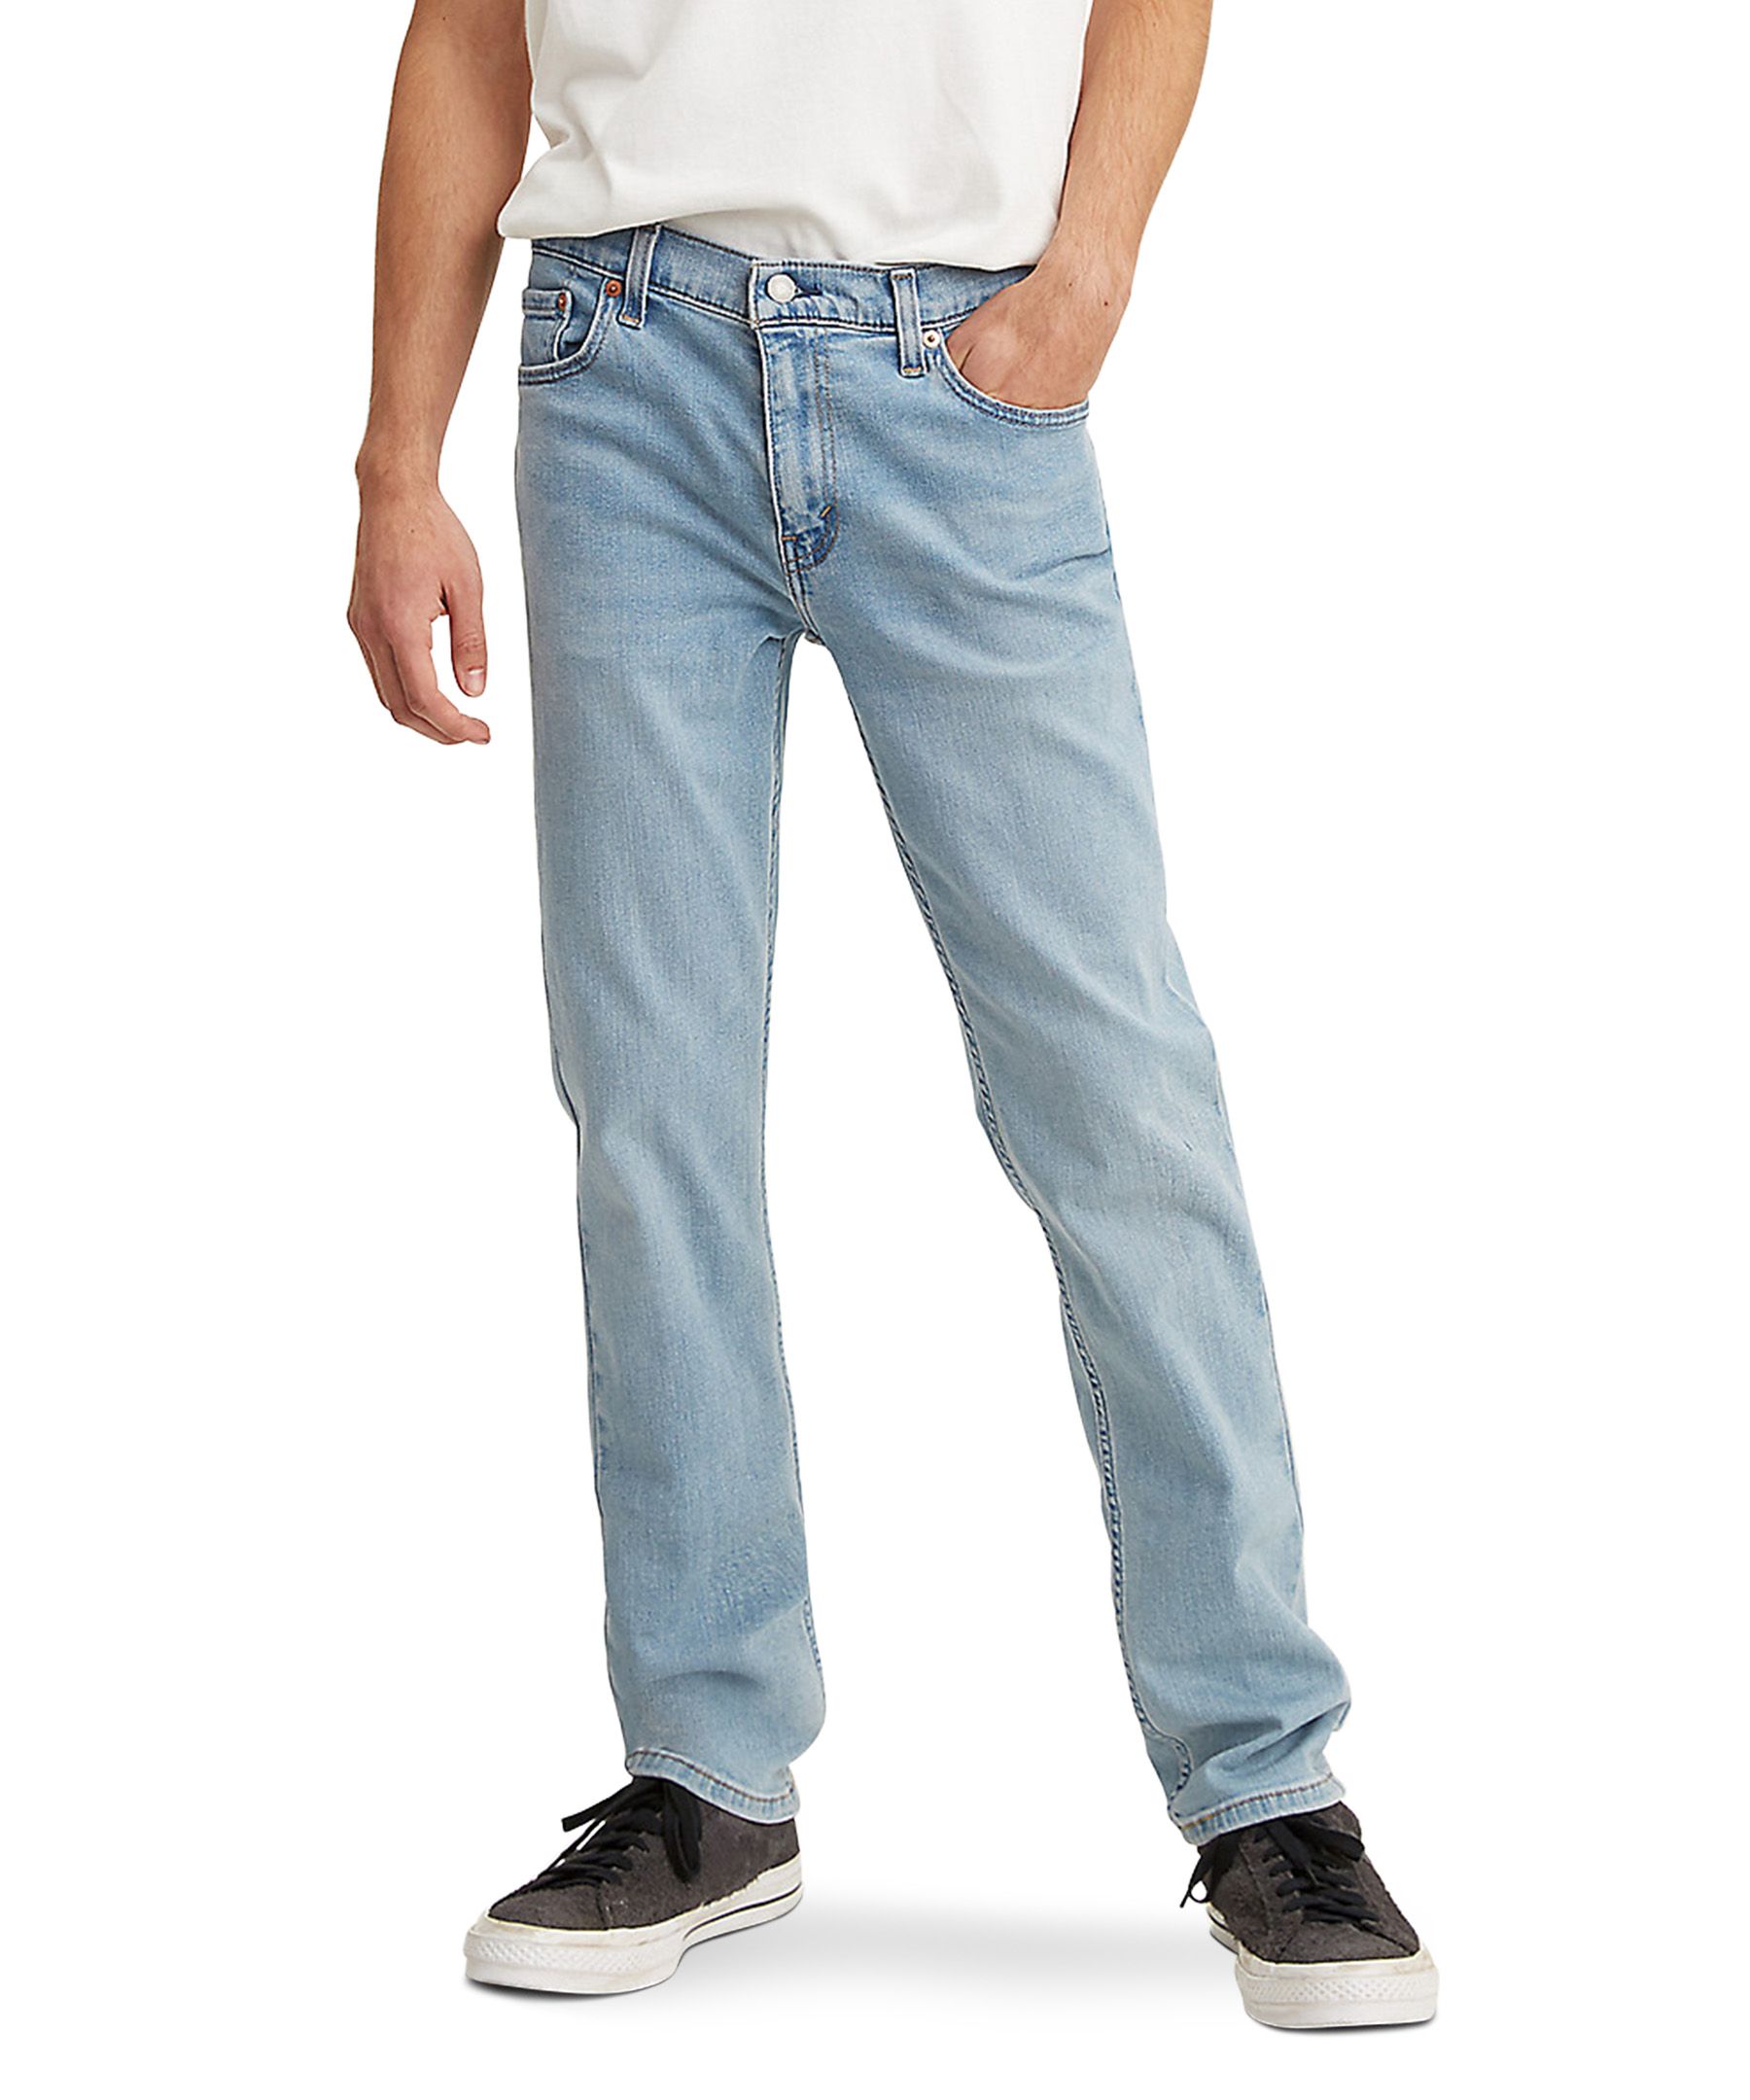 Levi's Men's 511 Advanced Stretch Slim Fit Jeans - Light Wash